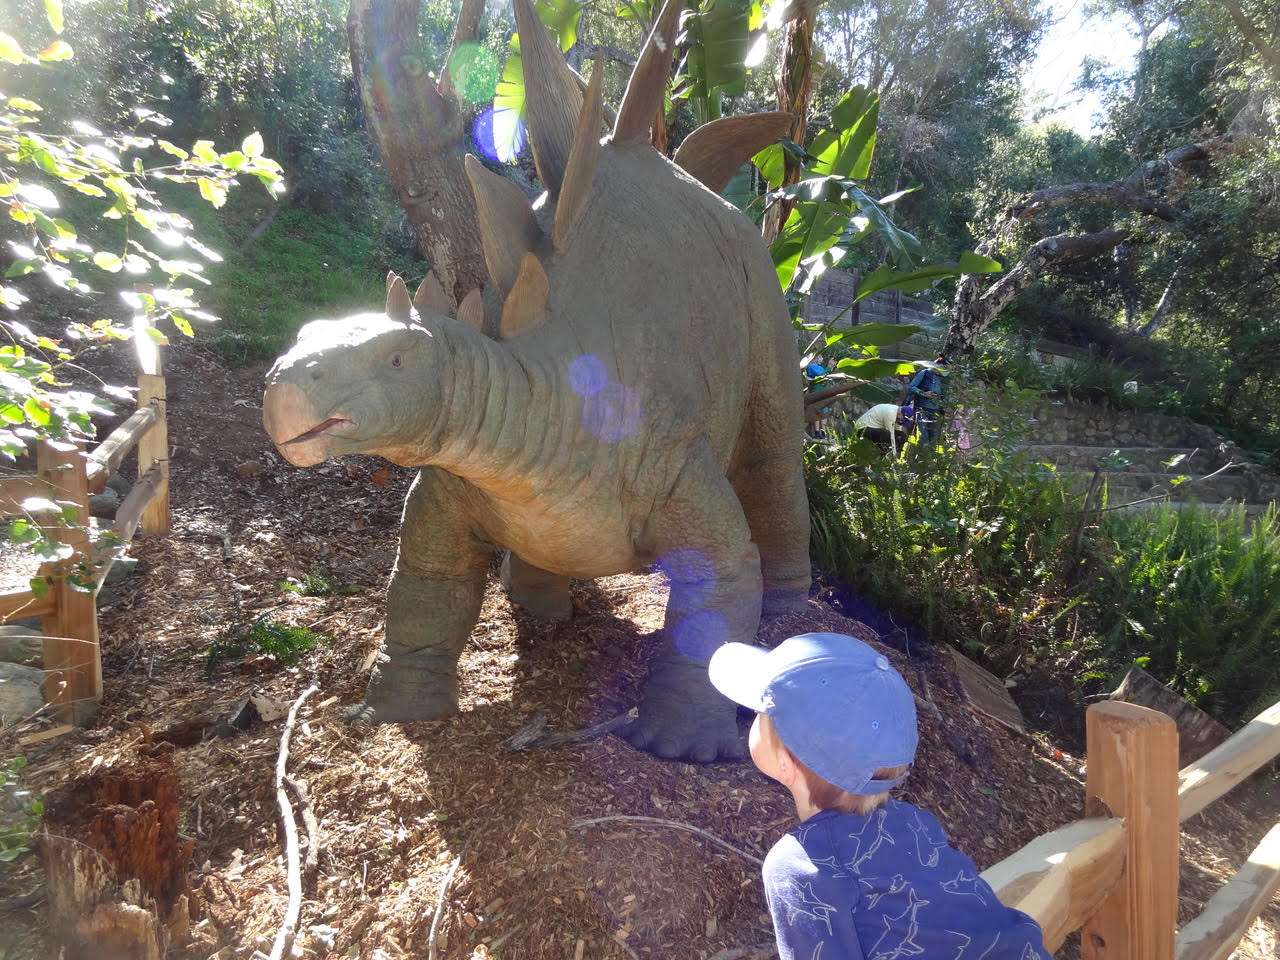 Dinosaurs in Santa Barbara